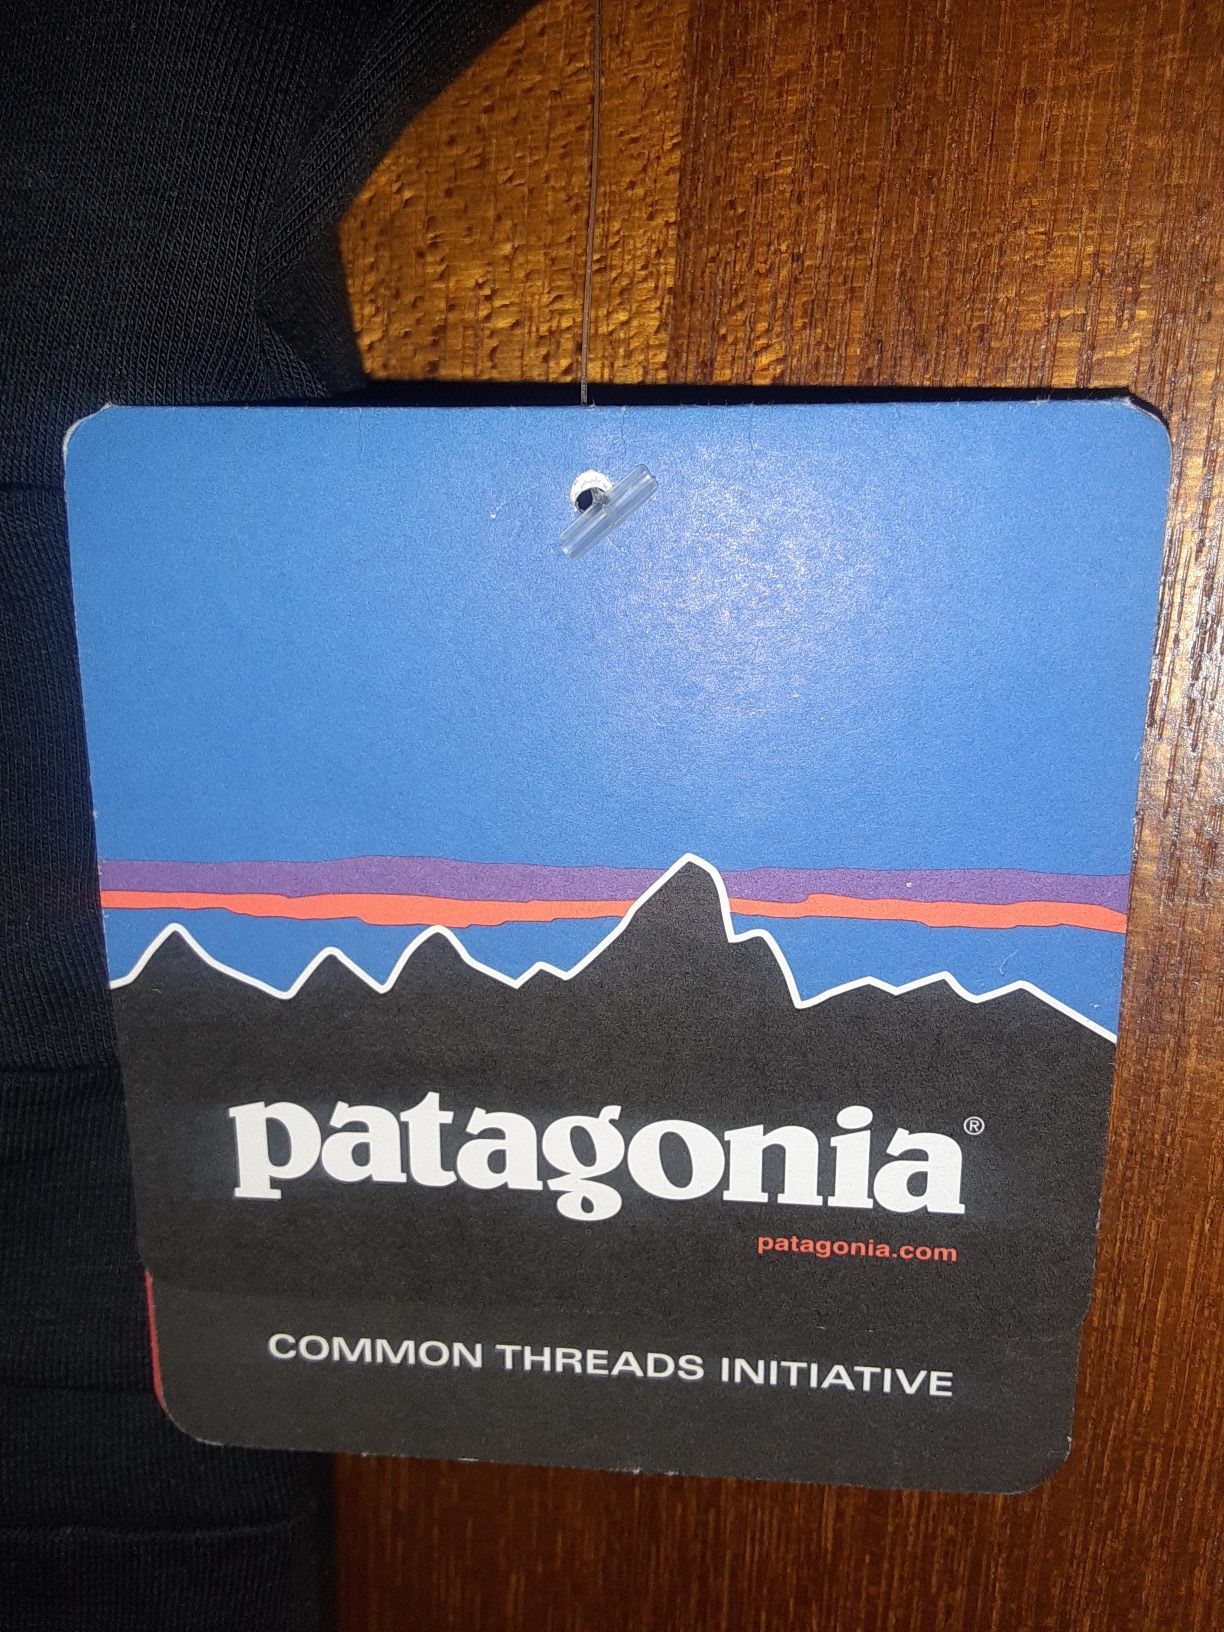 Patagonia dress